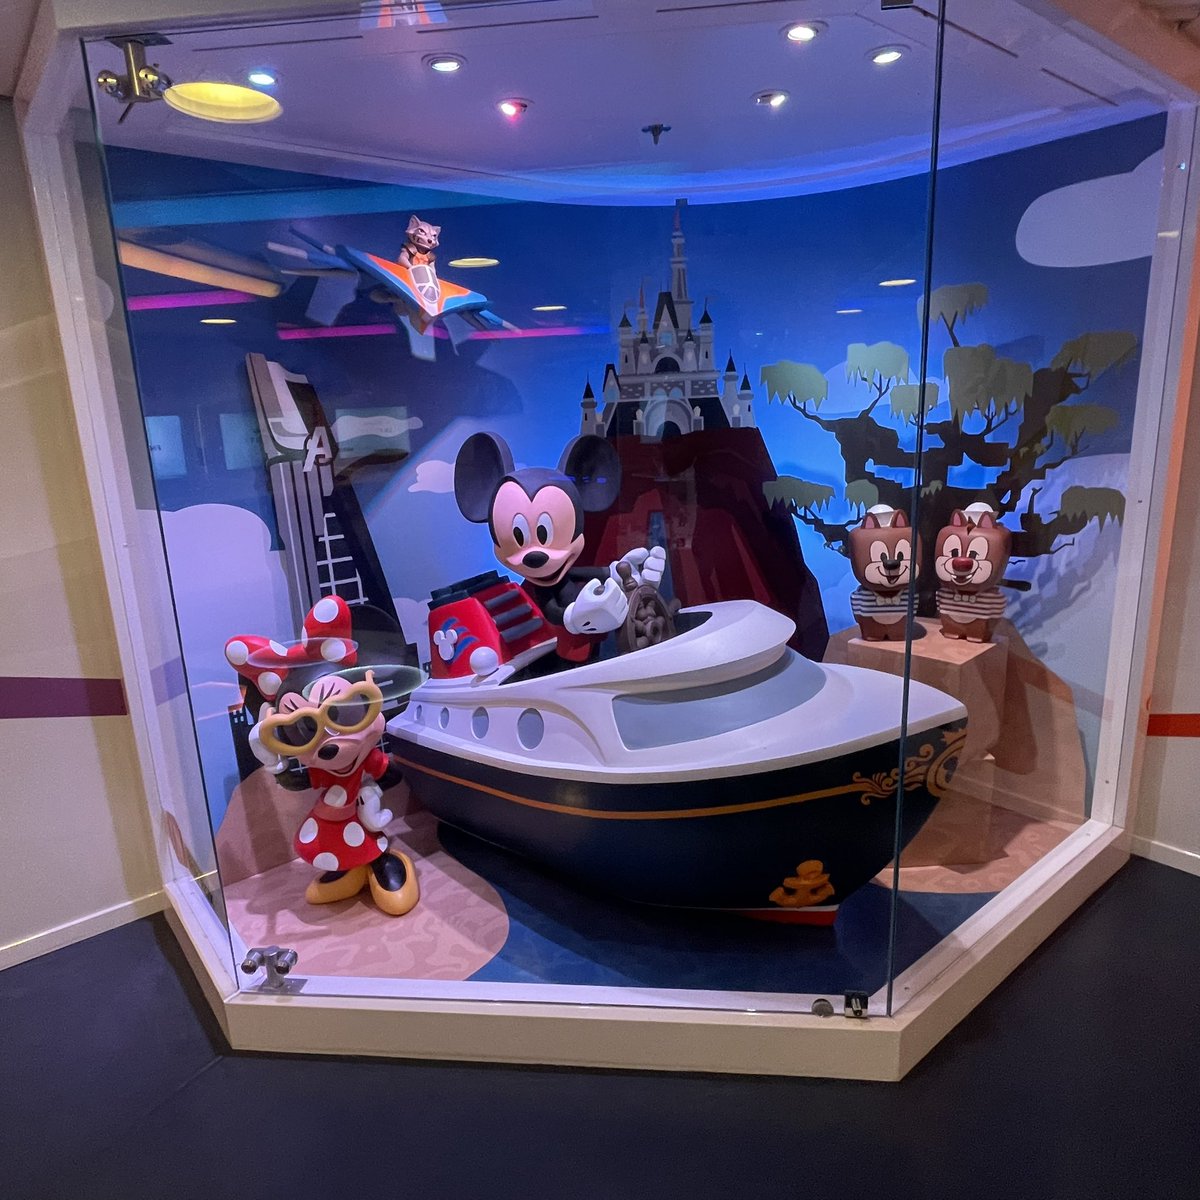 The Disney Infinity room on Disney Cruise Line’s Disney Dream is still intact. #DisneyInfinity